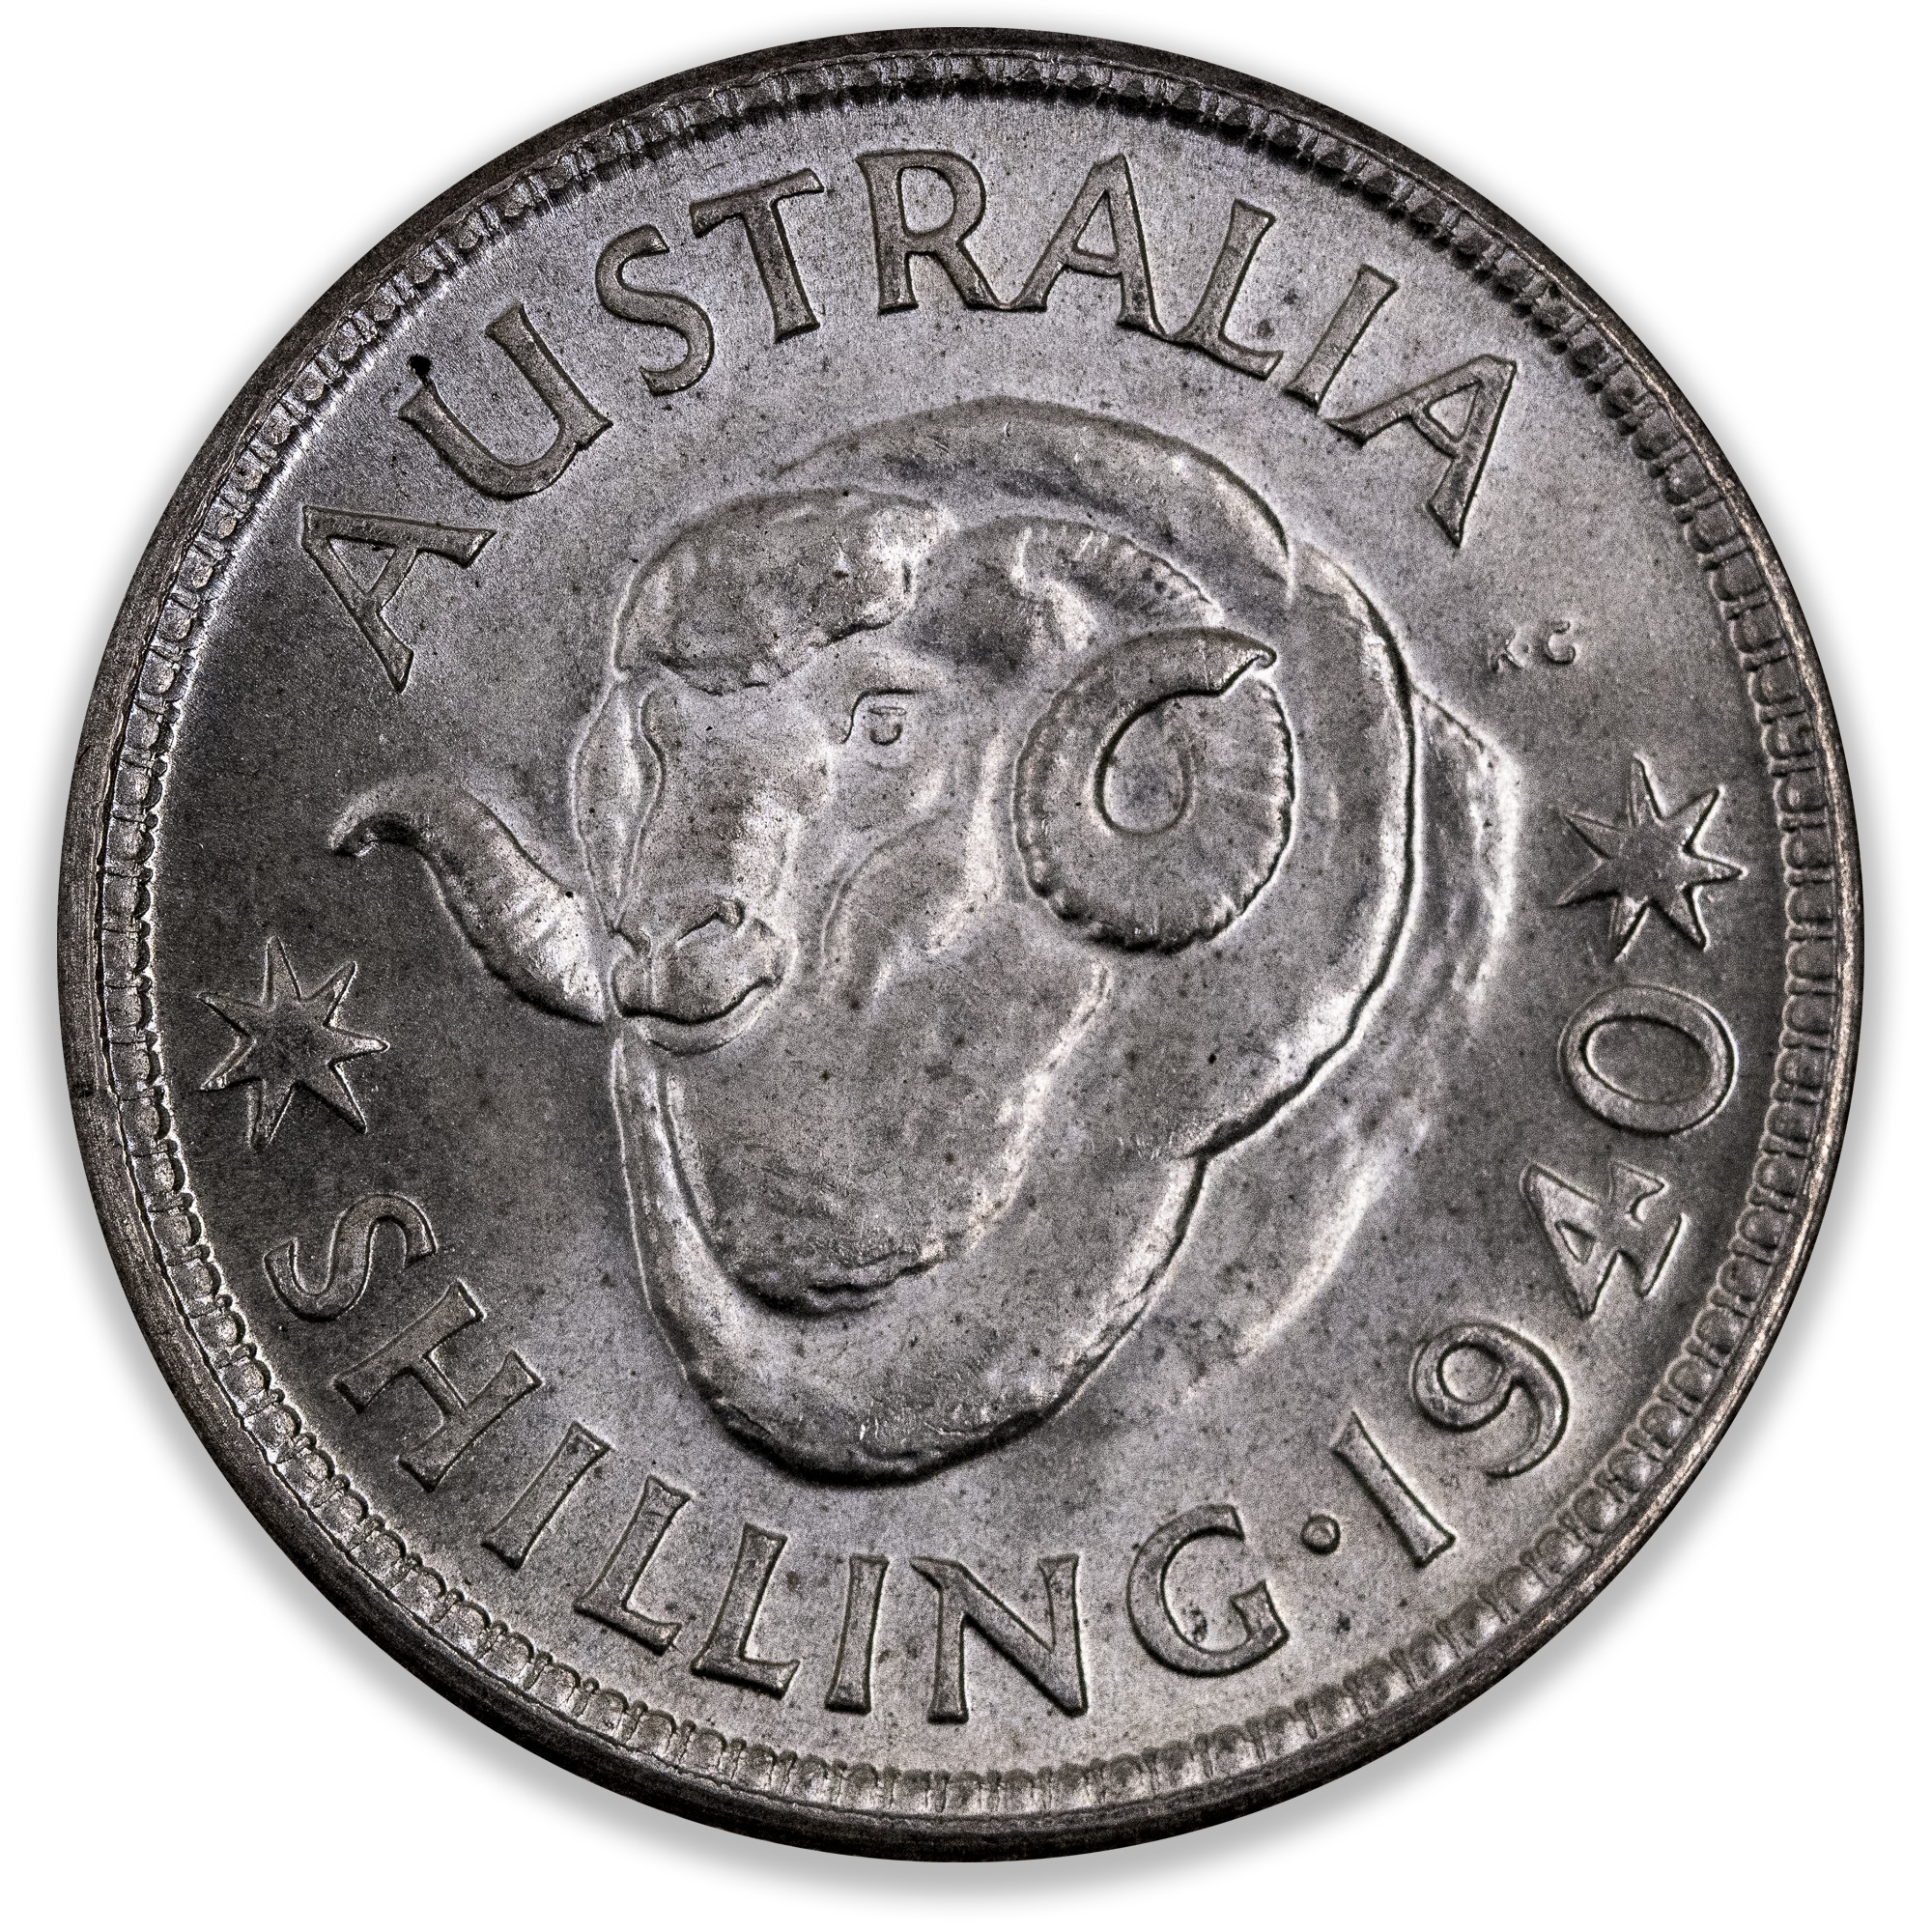 1940 Australian Shilling Choice Uncirculated